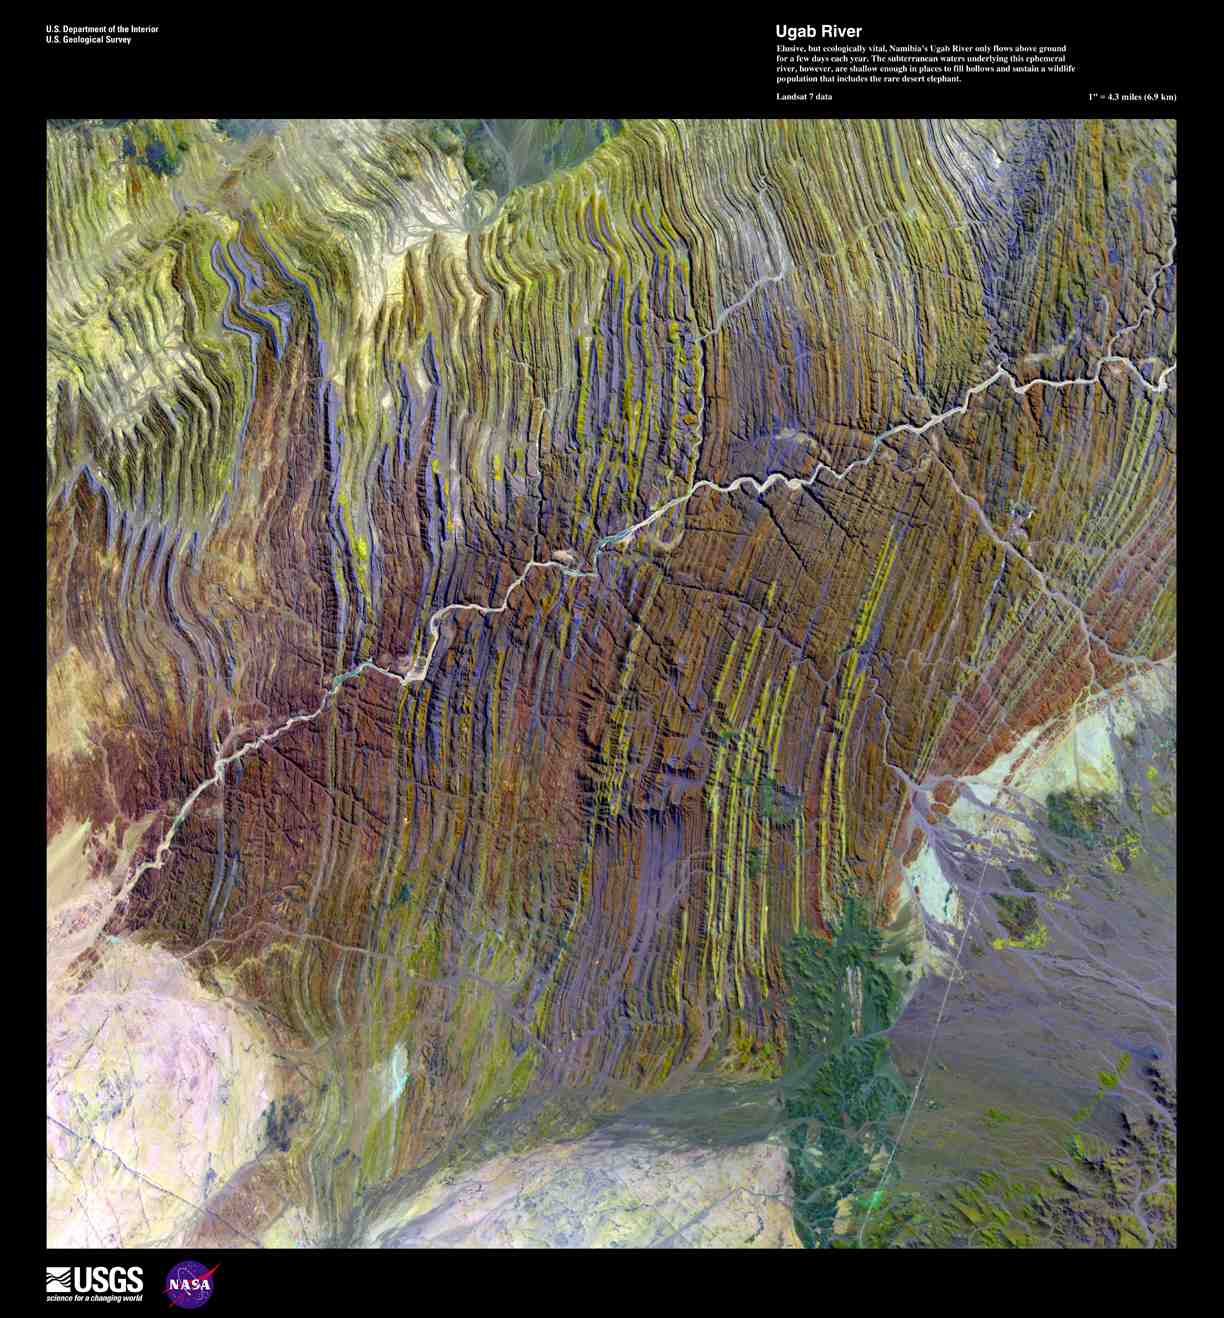 Ugab River. Image taken 9/10/2002 by Landsat 7 (This image can be found on Landsat 7 Path 180 Row 75, center: 21.7 N, 14.1 E.).